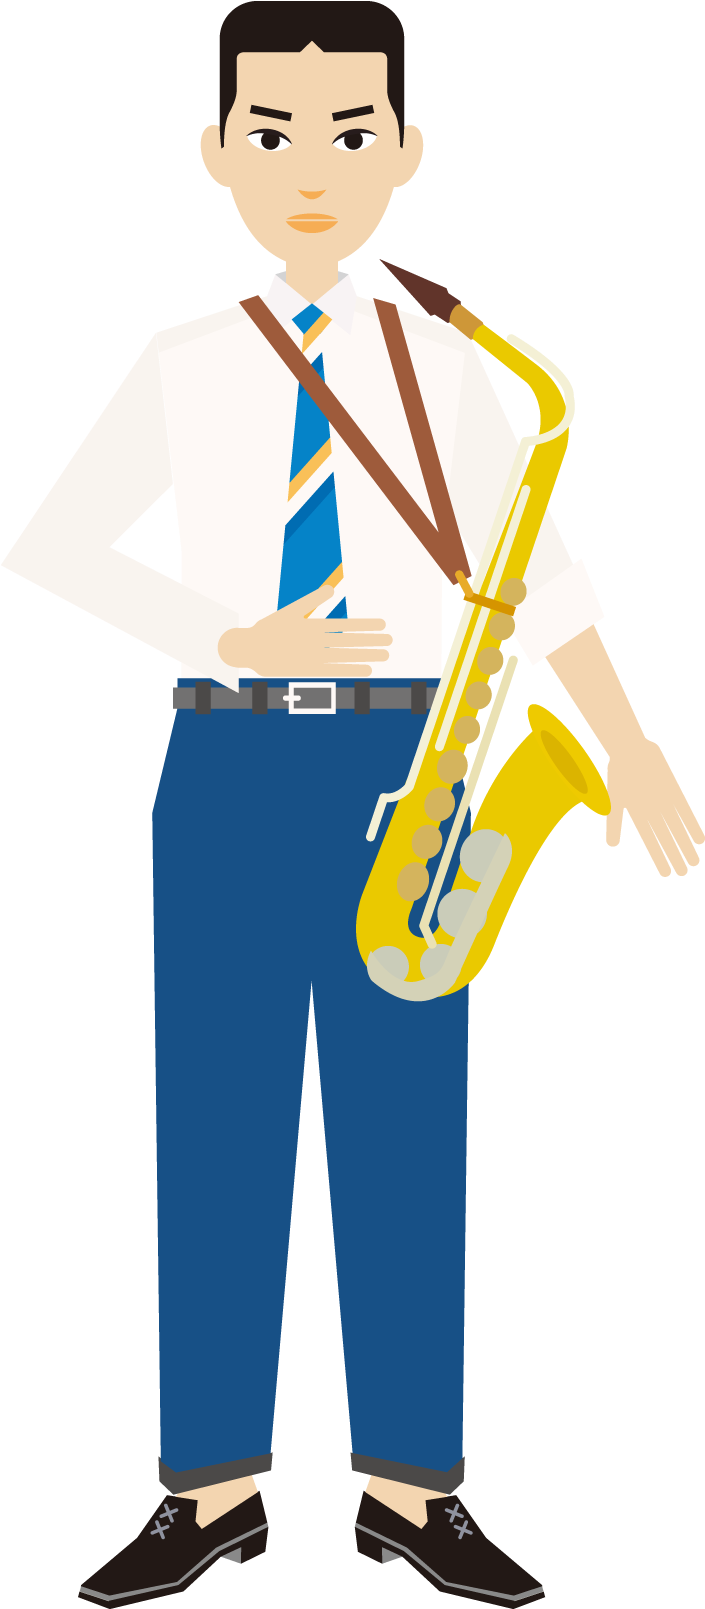 Trumpet Man 1758*1870 Transprent Png Free Download - Trumpet Man 1758*1870 Transprent Png Free Download (1758x1870)